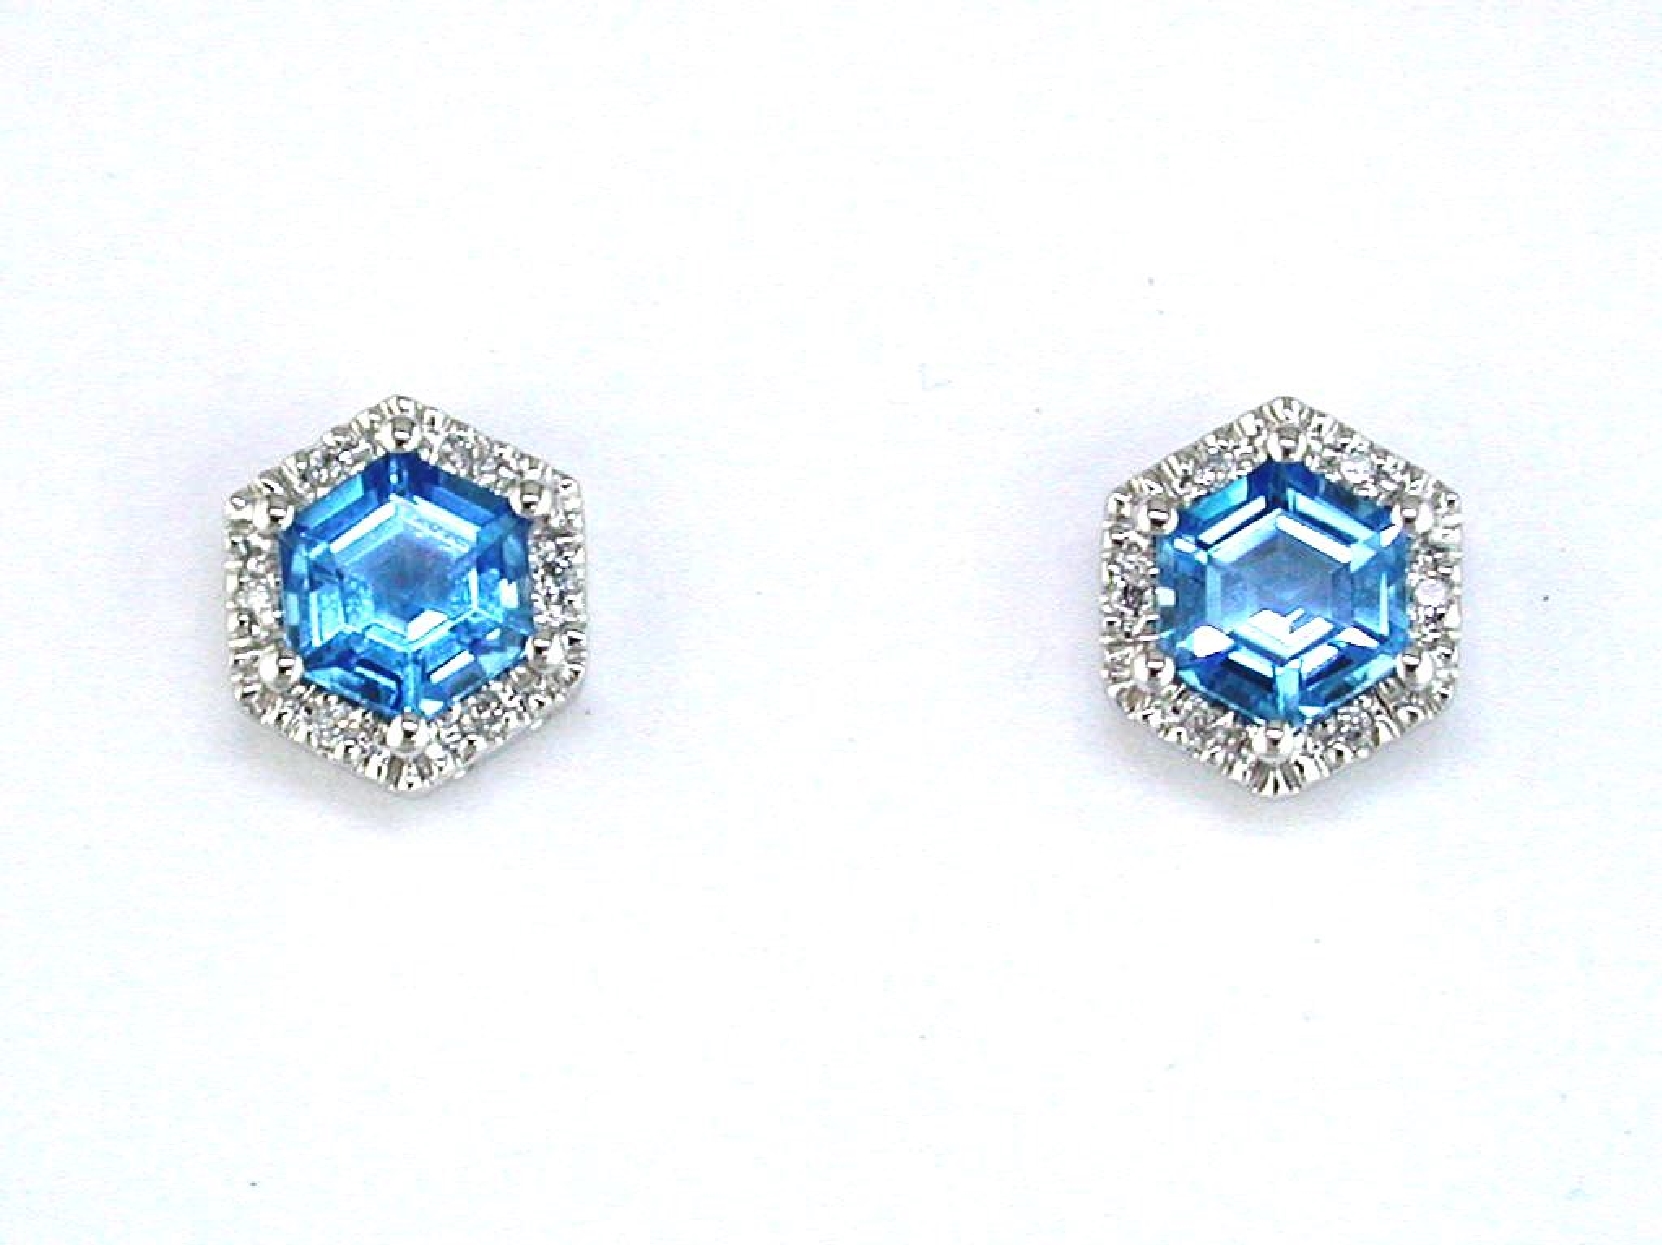 14K White Gold Hexagonal Cut Blue Topaz Studs with Diamond Halo
1.30CTTW Blue Topaz
0.05CTTW Diamonds